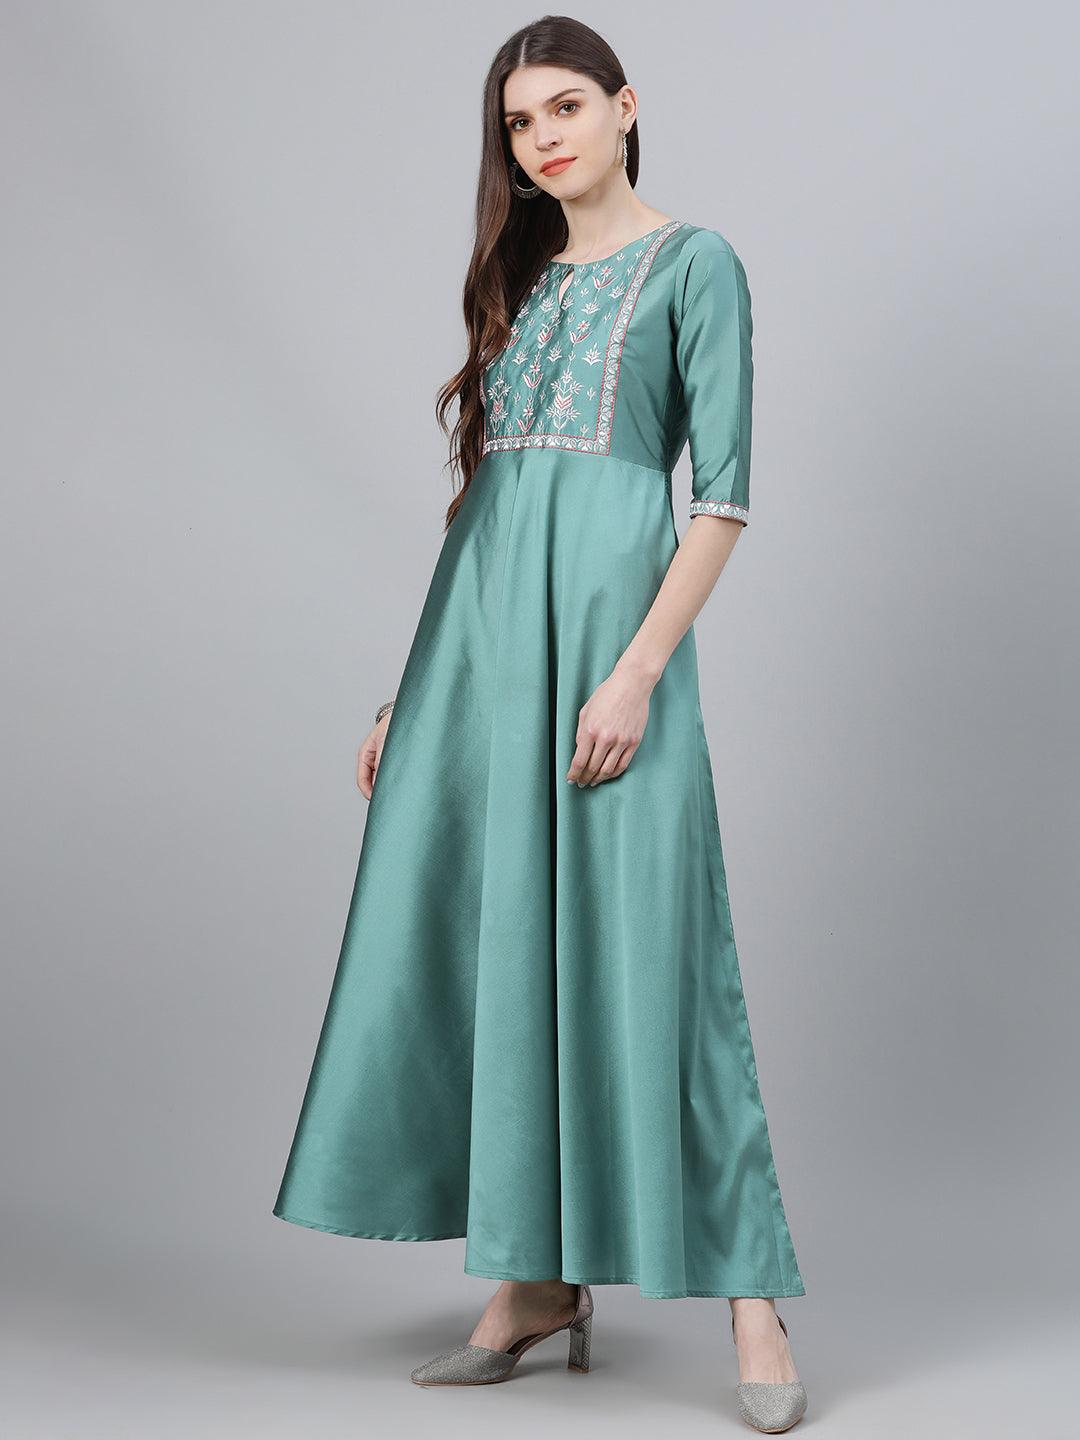 Green Solid Chanderi Dress With Dupatta